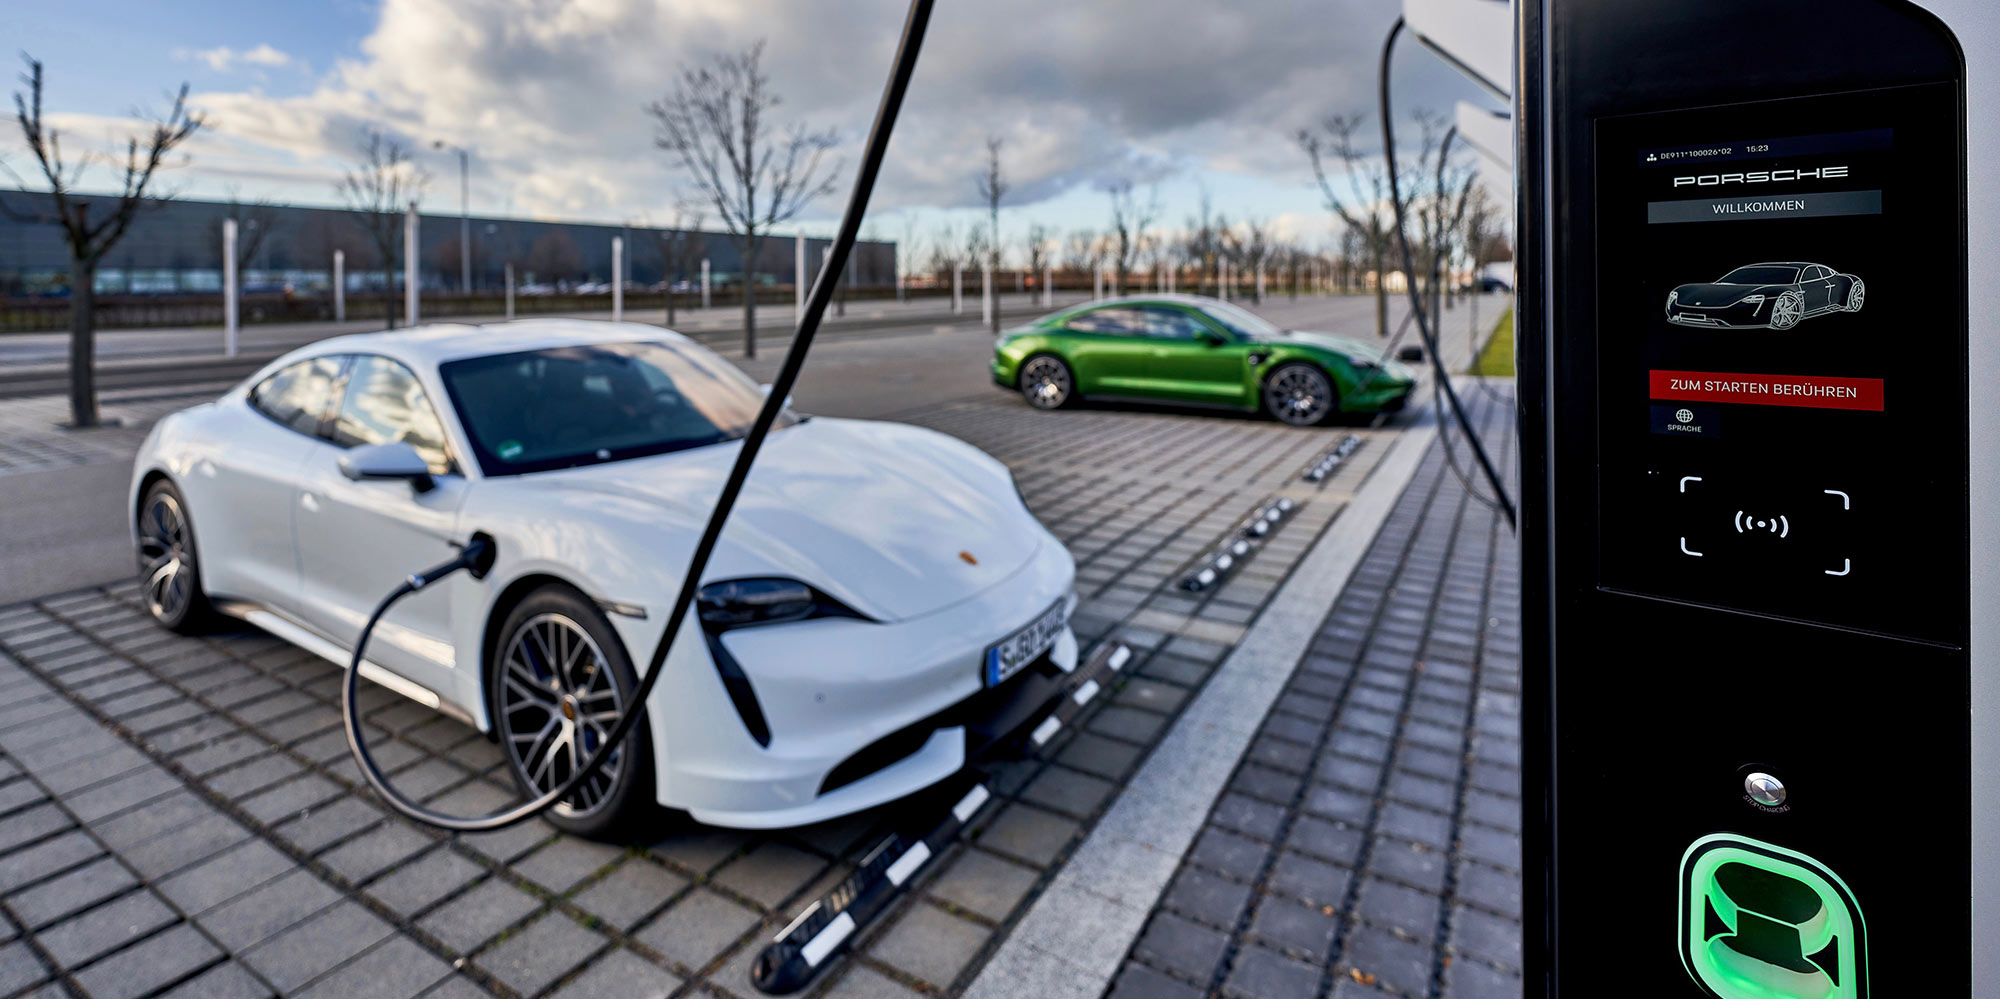 Porsche Turbo Charging, Taycan, Rapid-charging park, Leipzig